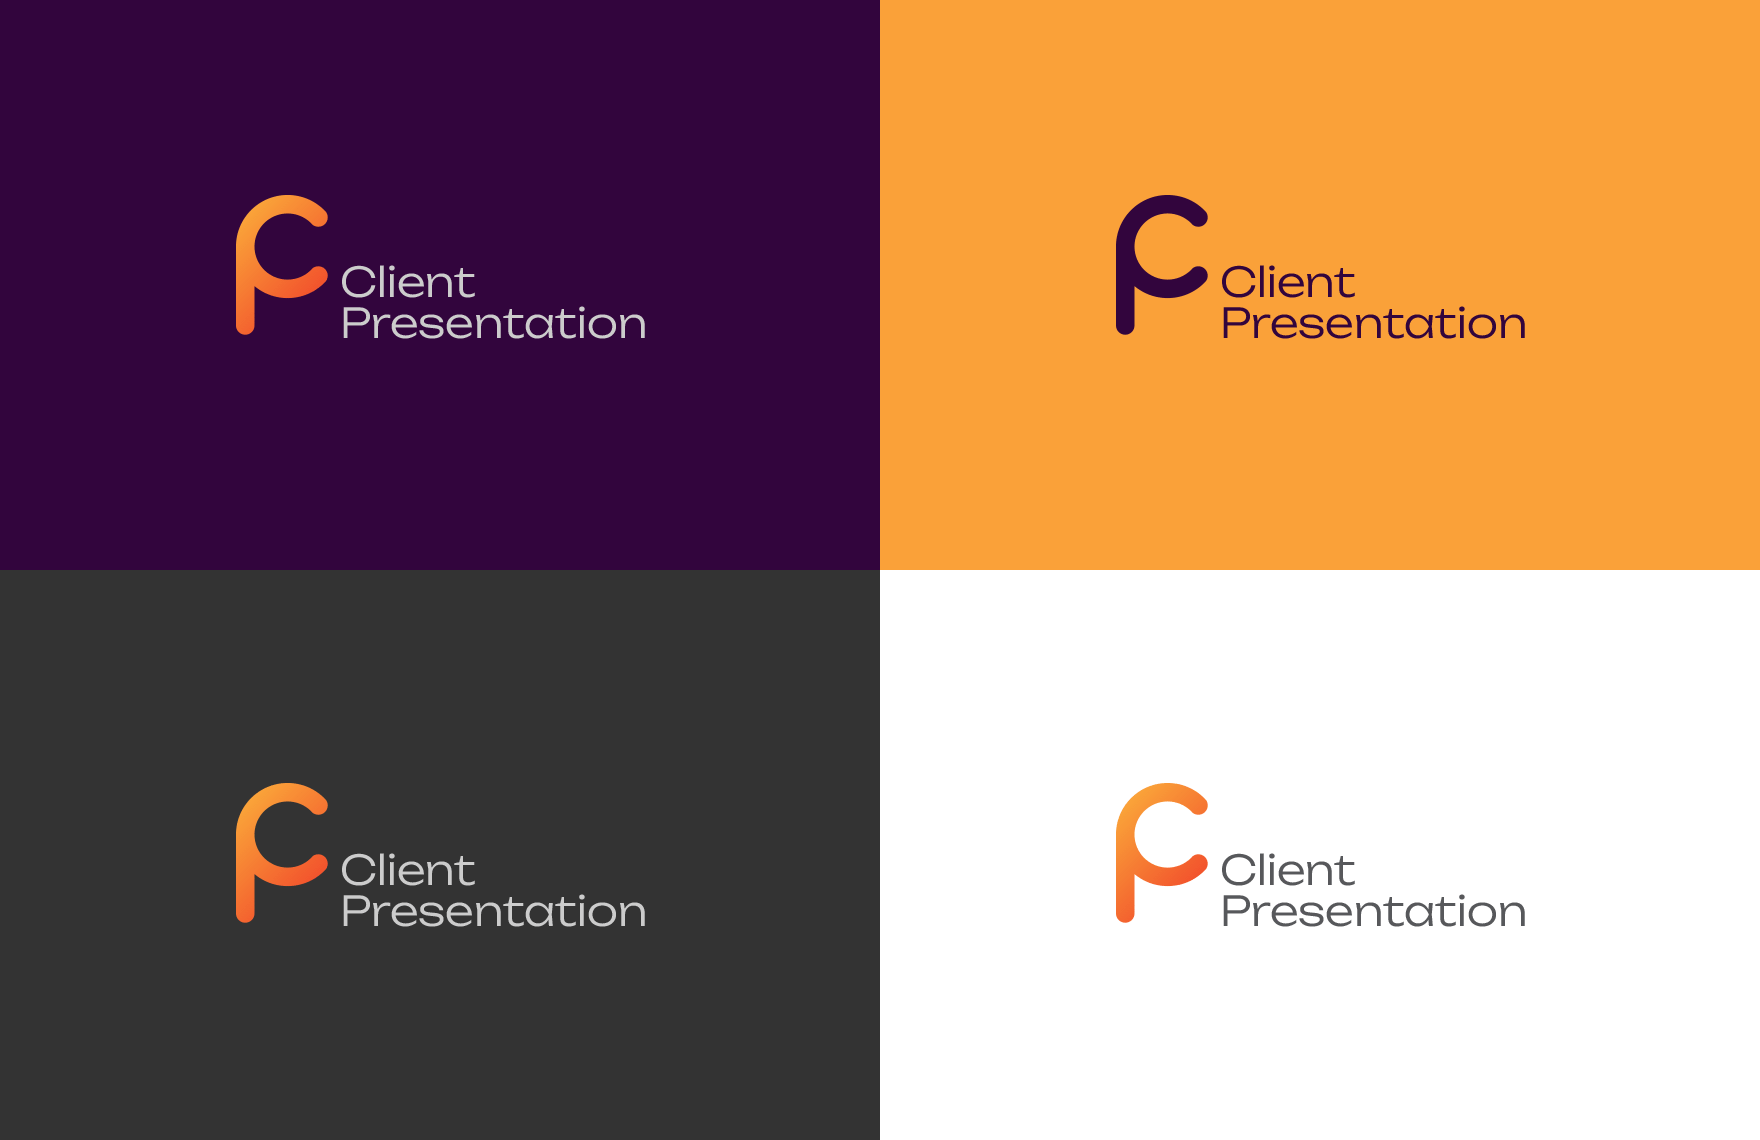 Client Presentation Logo Template